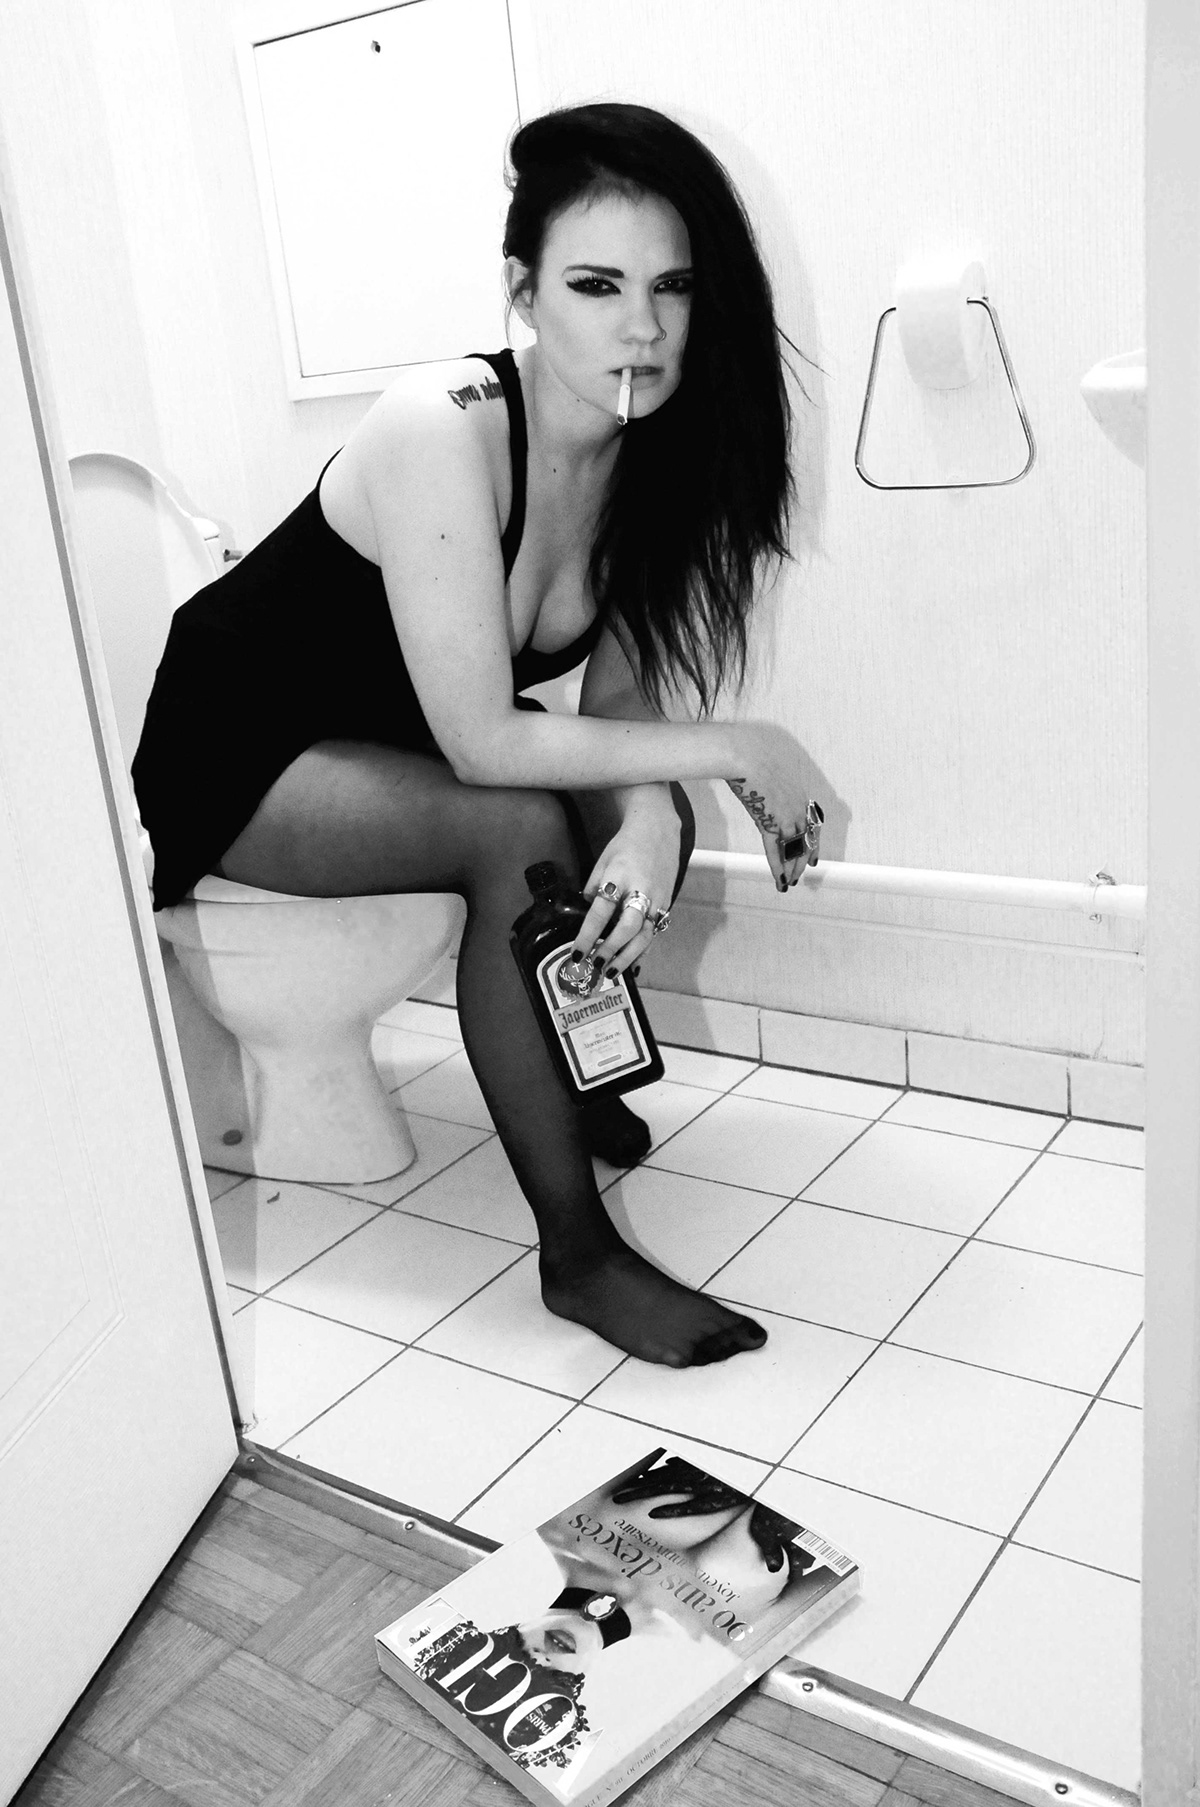 berlin Jagermeister toilet punk girl